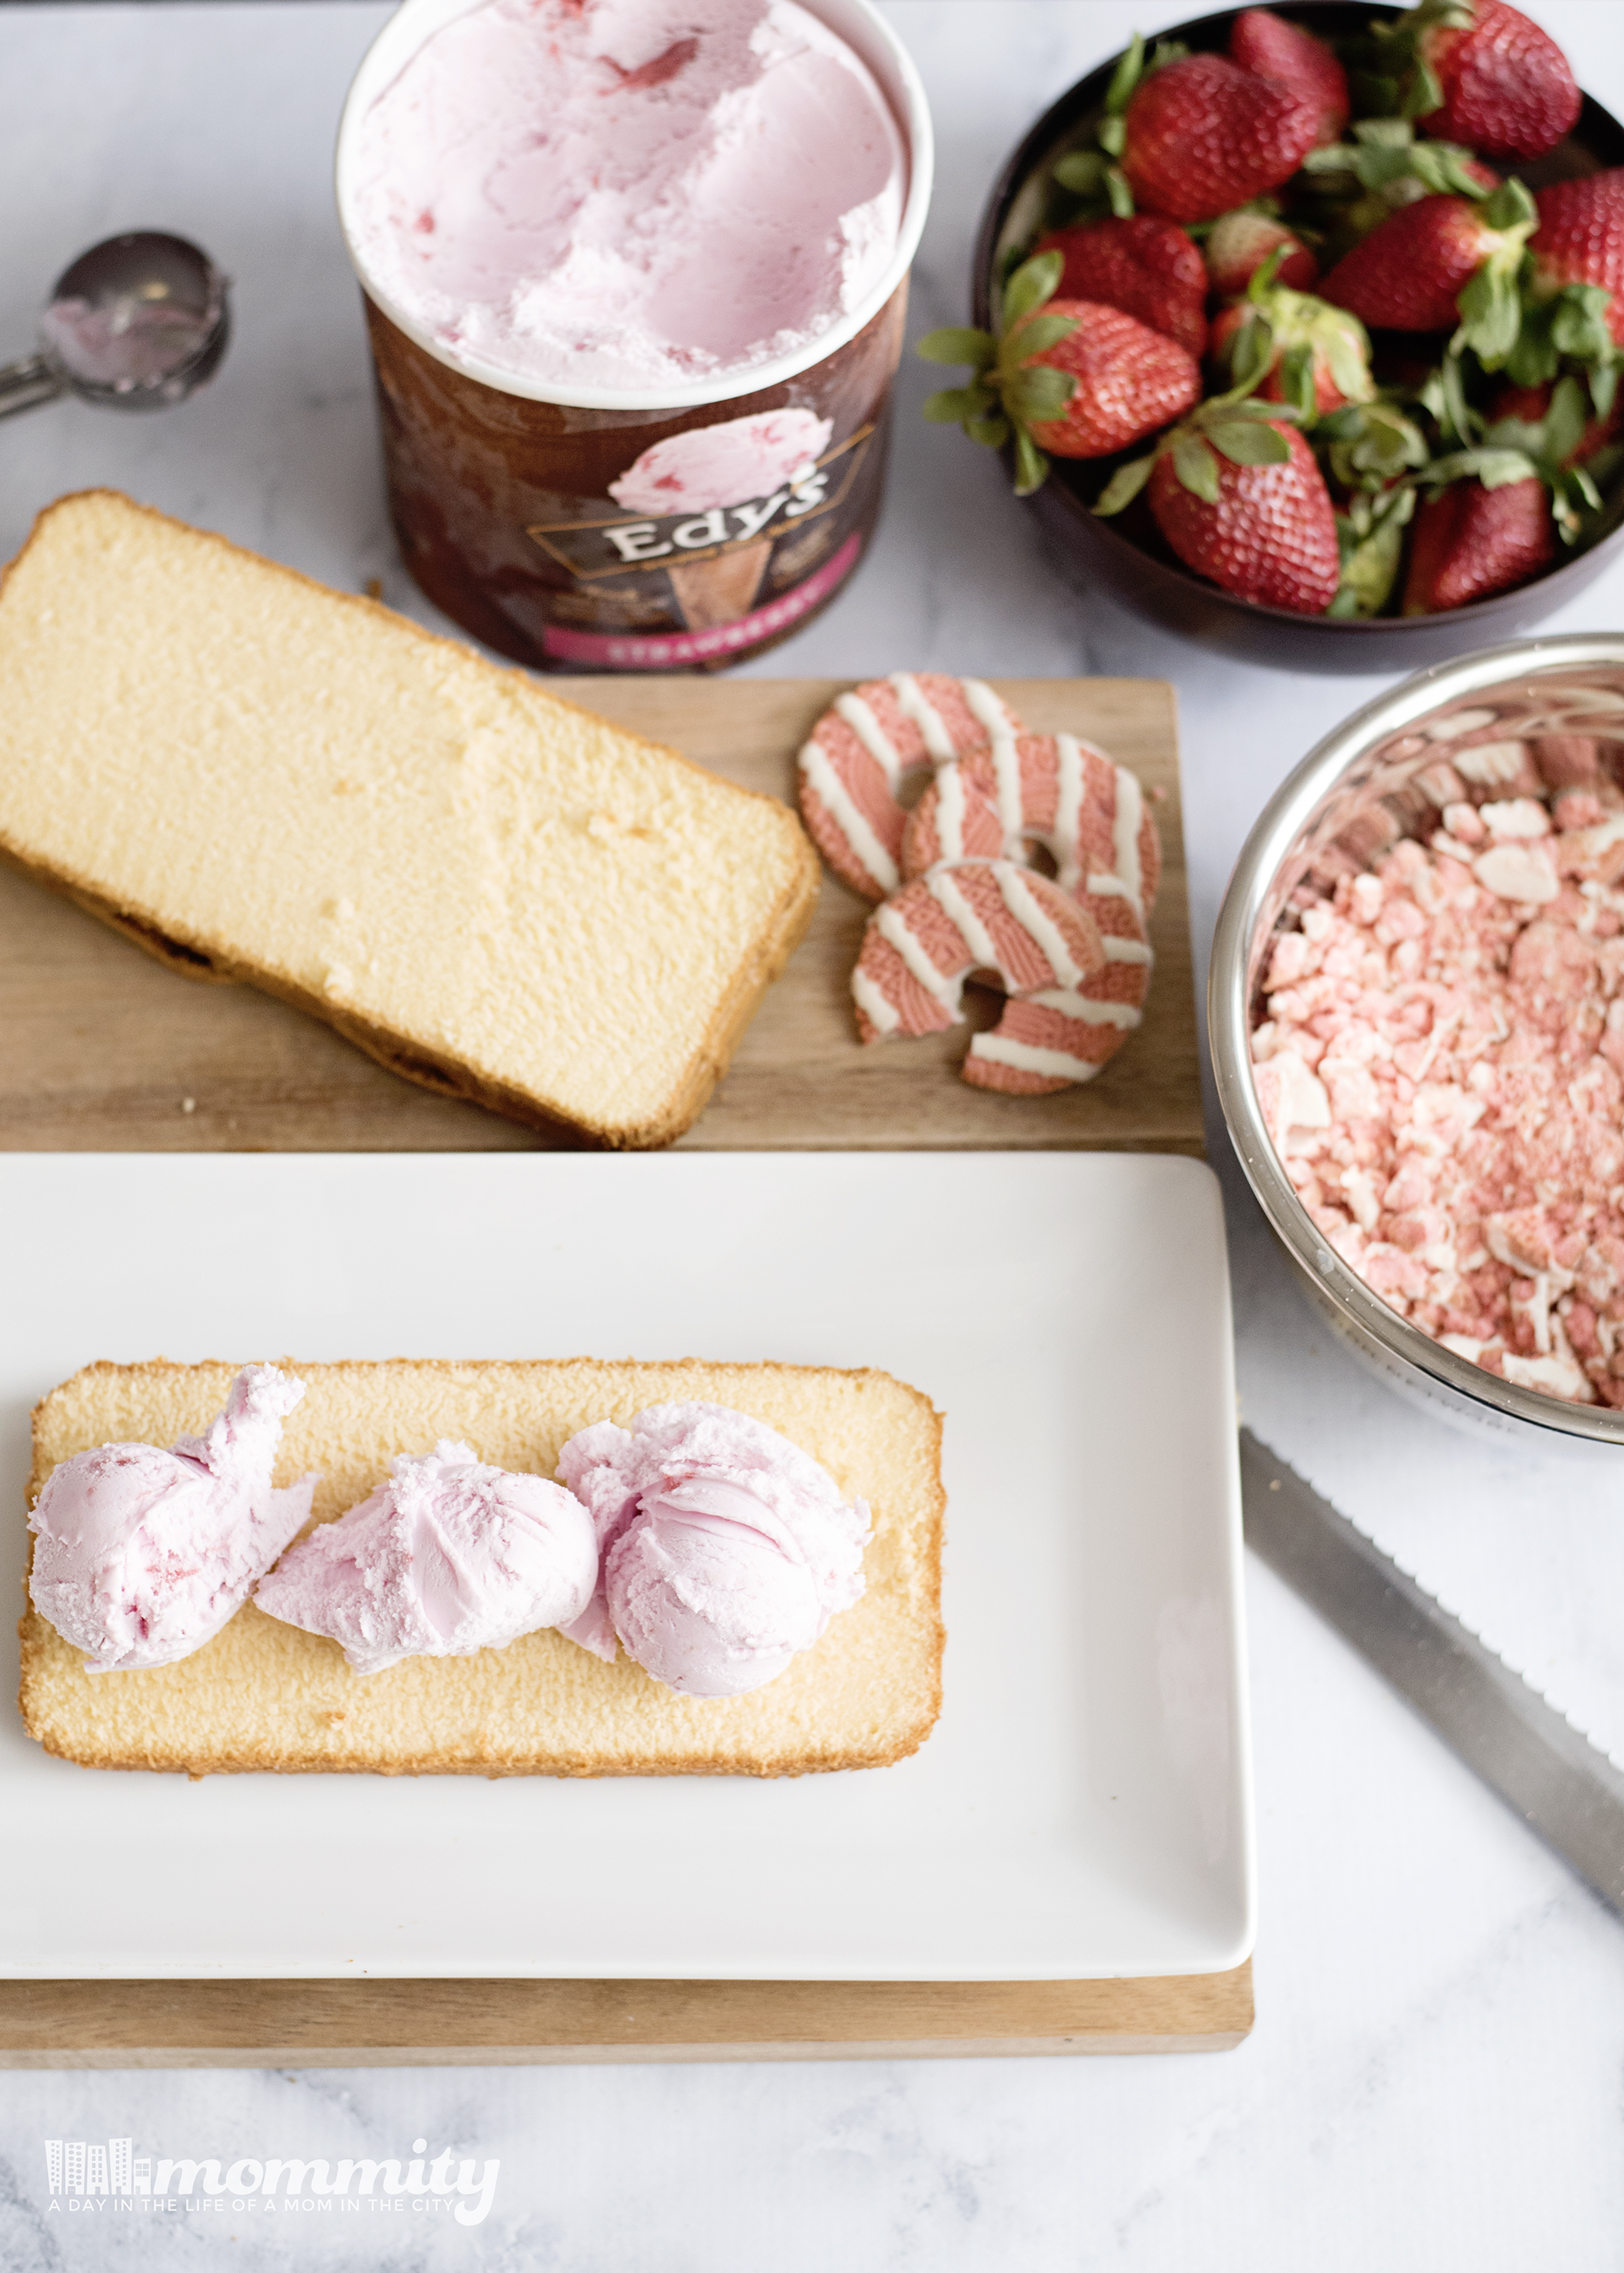 Strawberry Shortcake Ice Cream Cake Recipe Quick and Easy